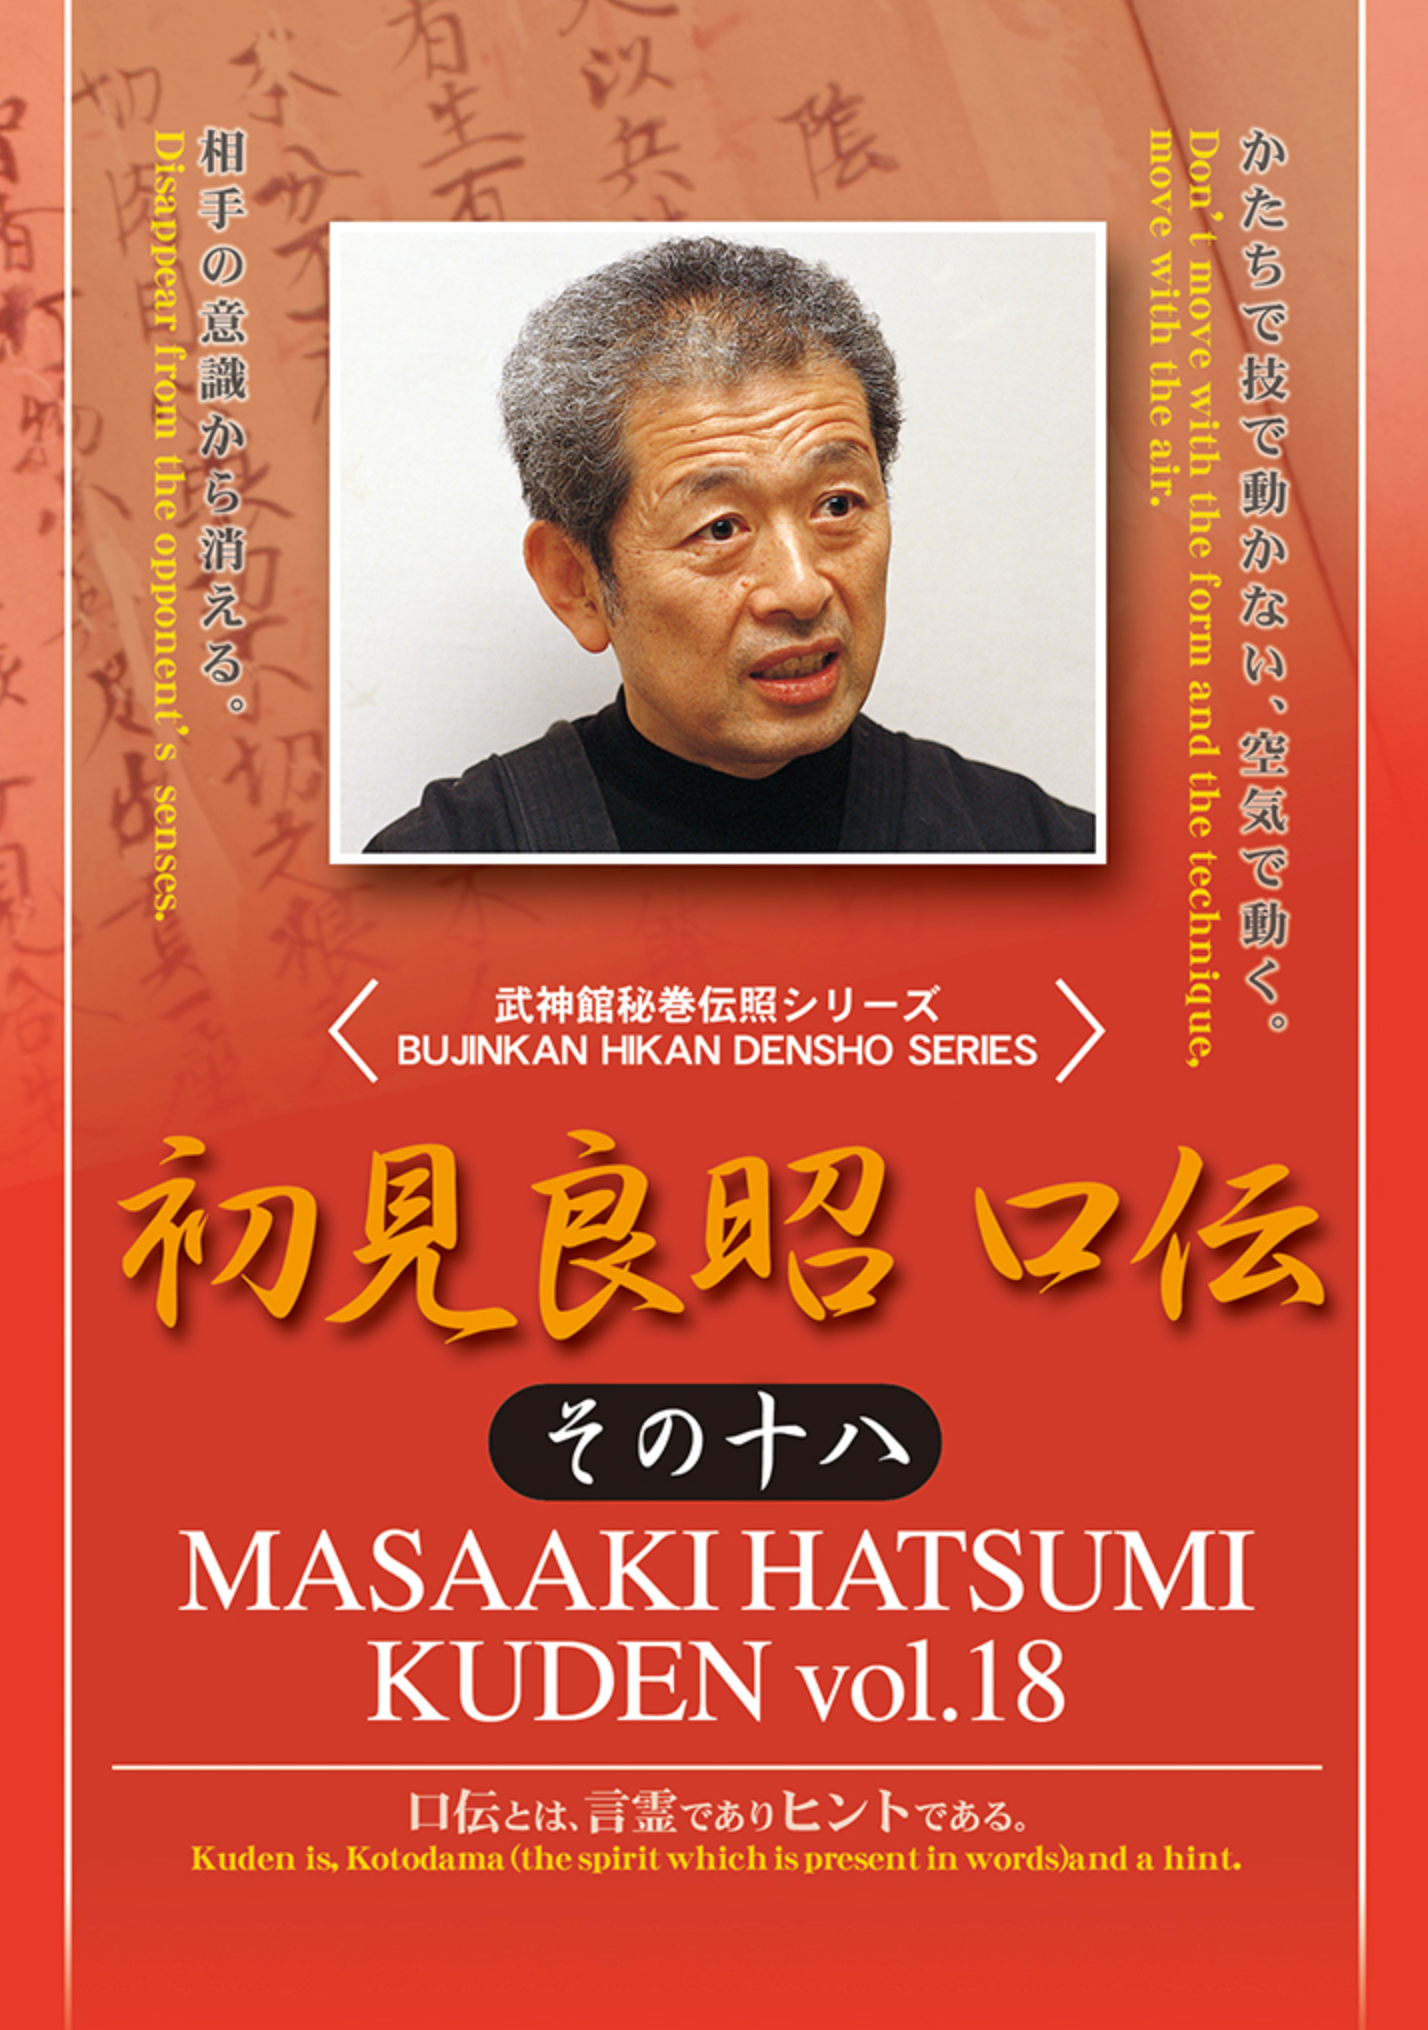 Kuden Vol 18 DVD with Masaaki Hatsumi - Budovideos Inc